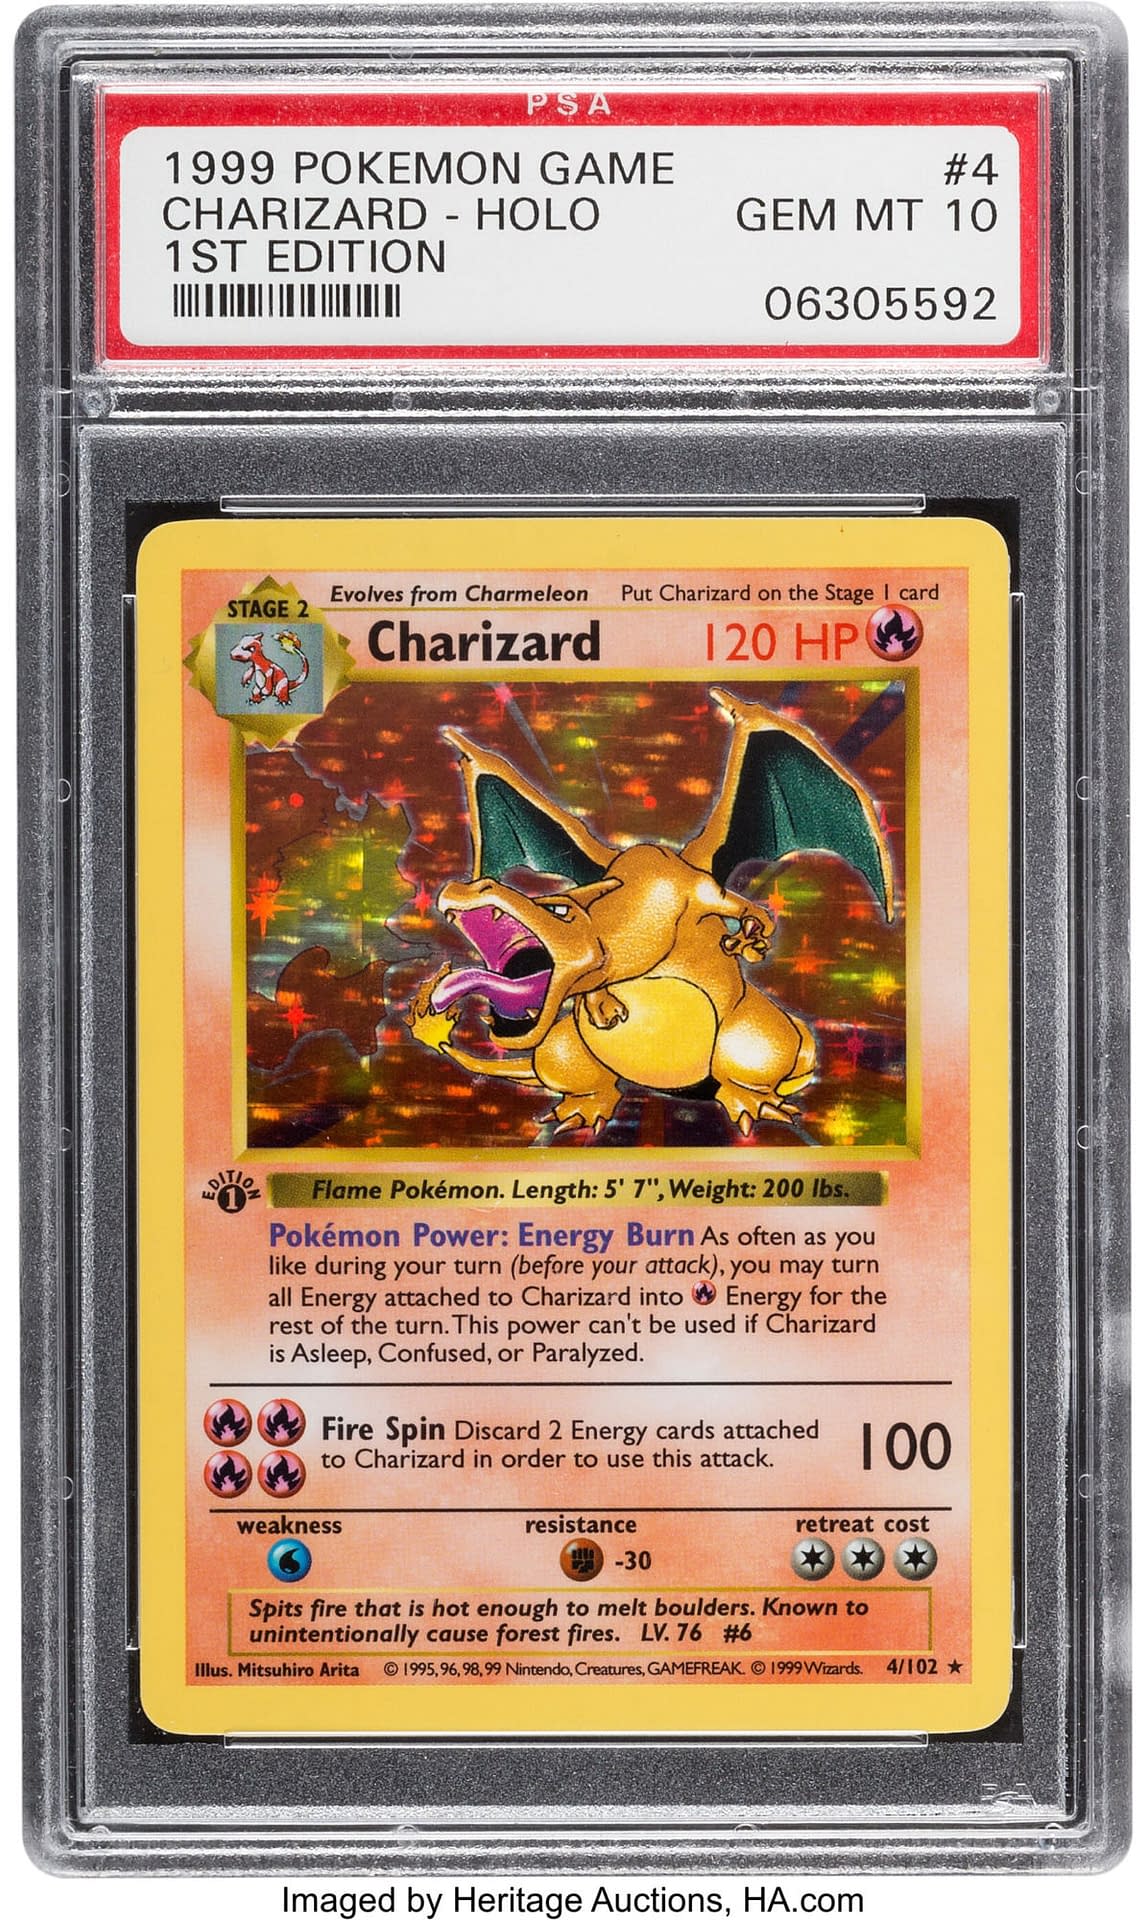 Pokémon TCG Holy Grail: PSA 10 1st Edition Charizard Hits Auction